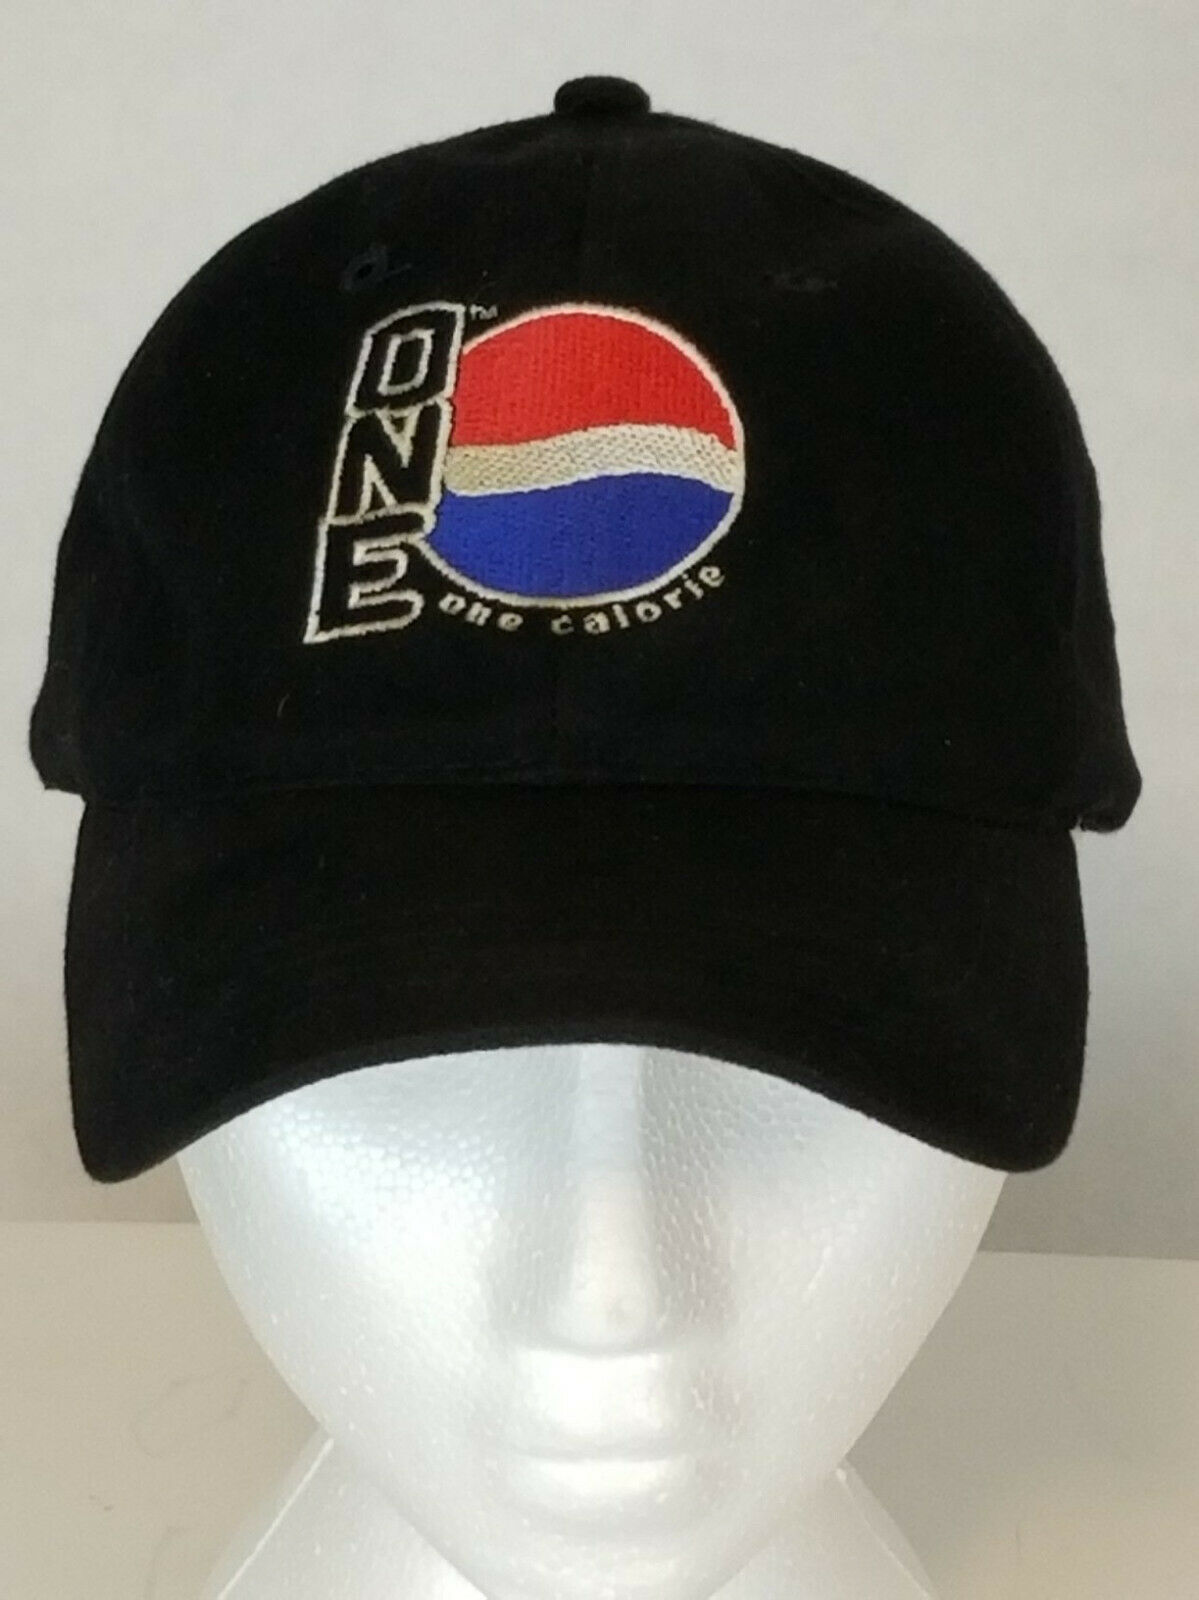 Pepsi One Calorie Baseball Trucker Cap Hat Black Adjustable Strap